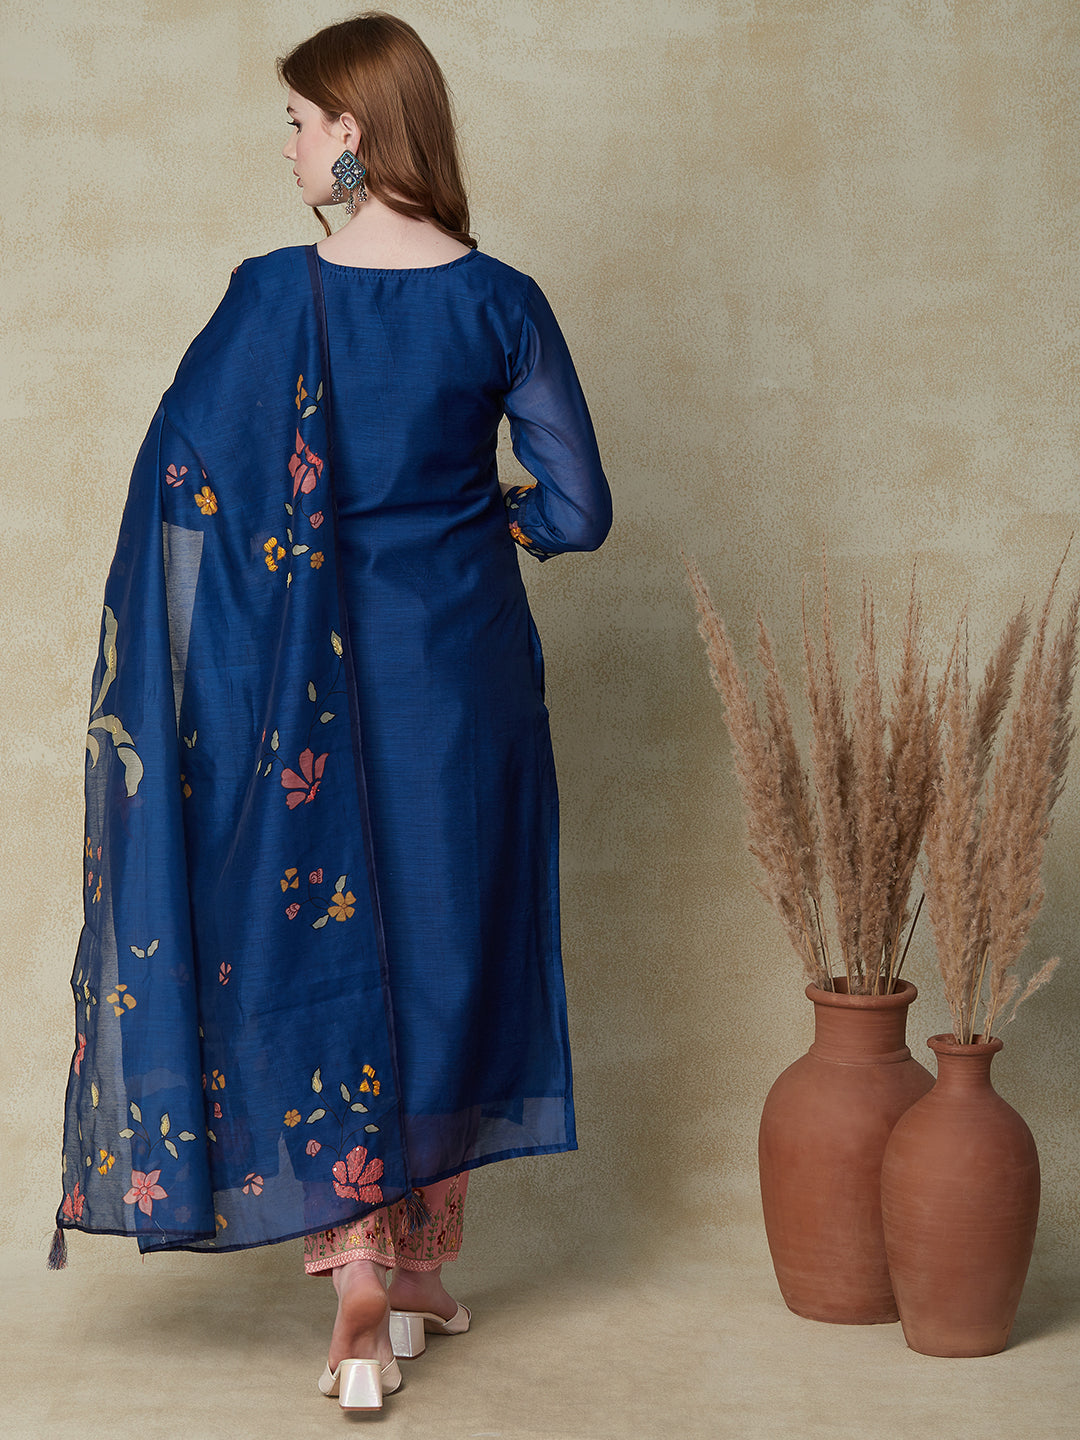 Floral Printed Resham Embroidered Kurta with Floral Dupatta - Blue